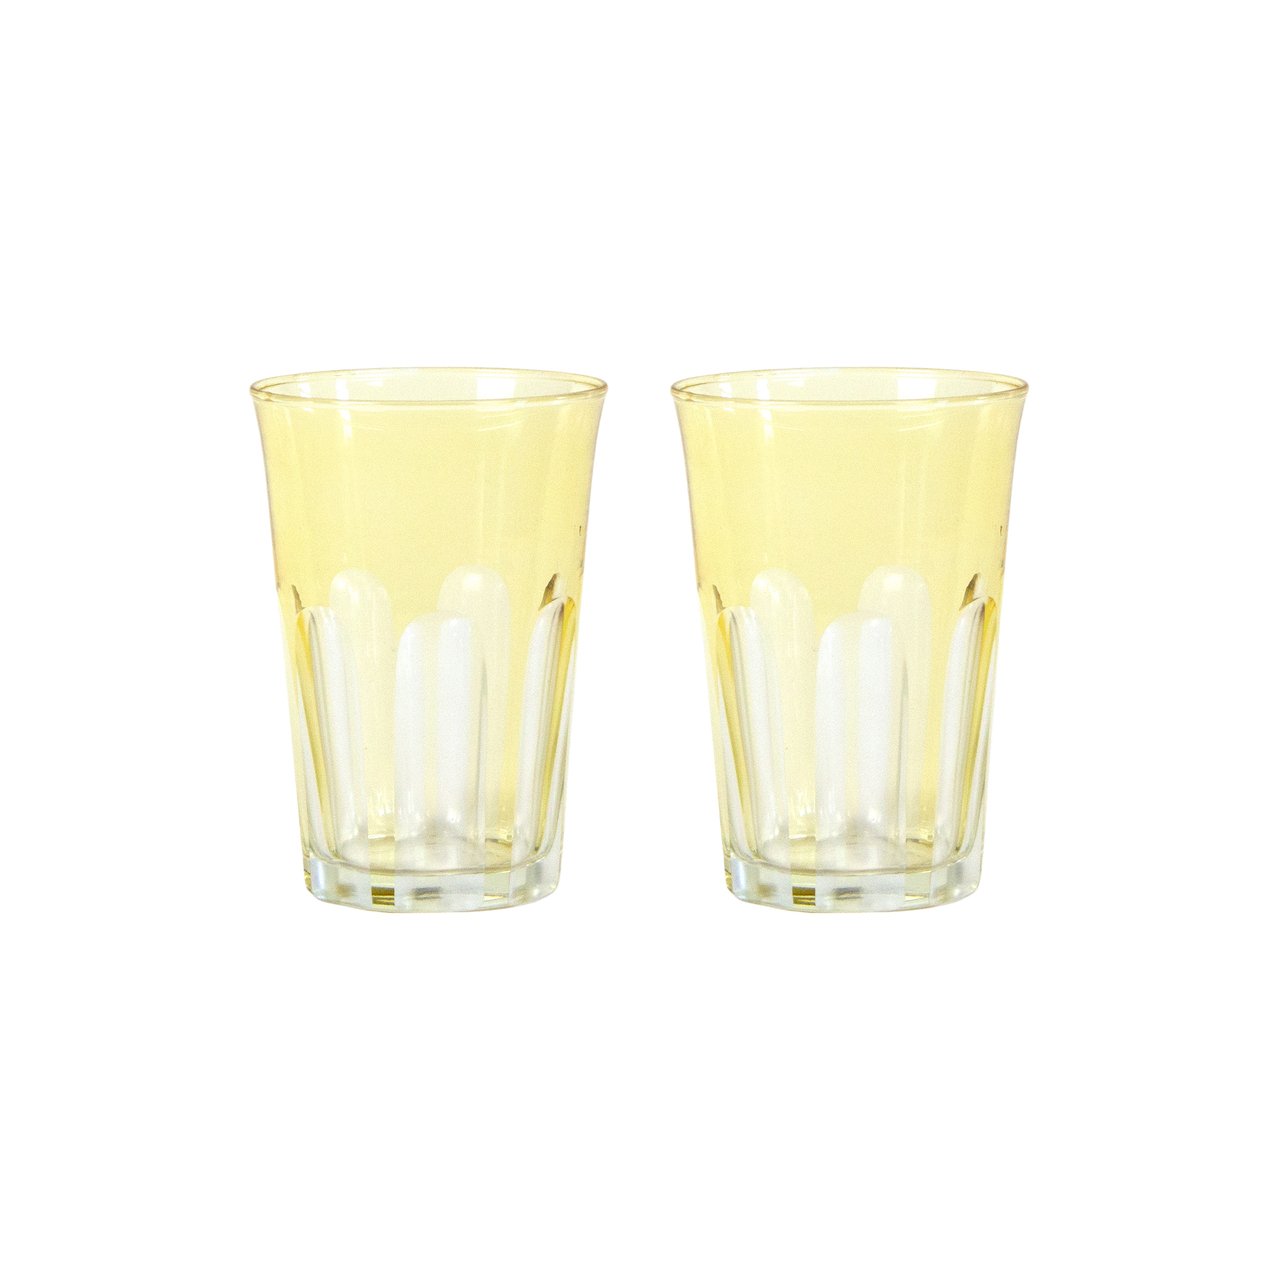 Set of 2 Rialto Limoncello (Light Yellow) Glasses